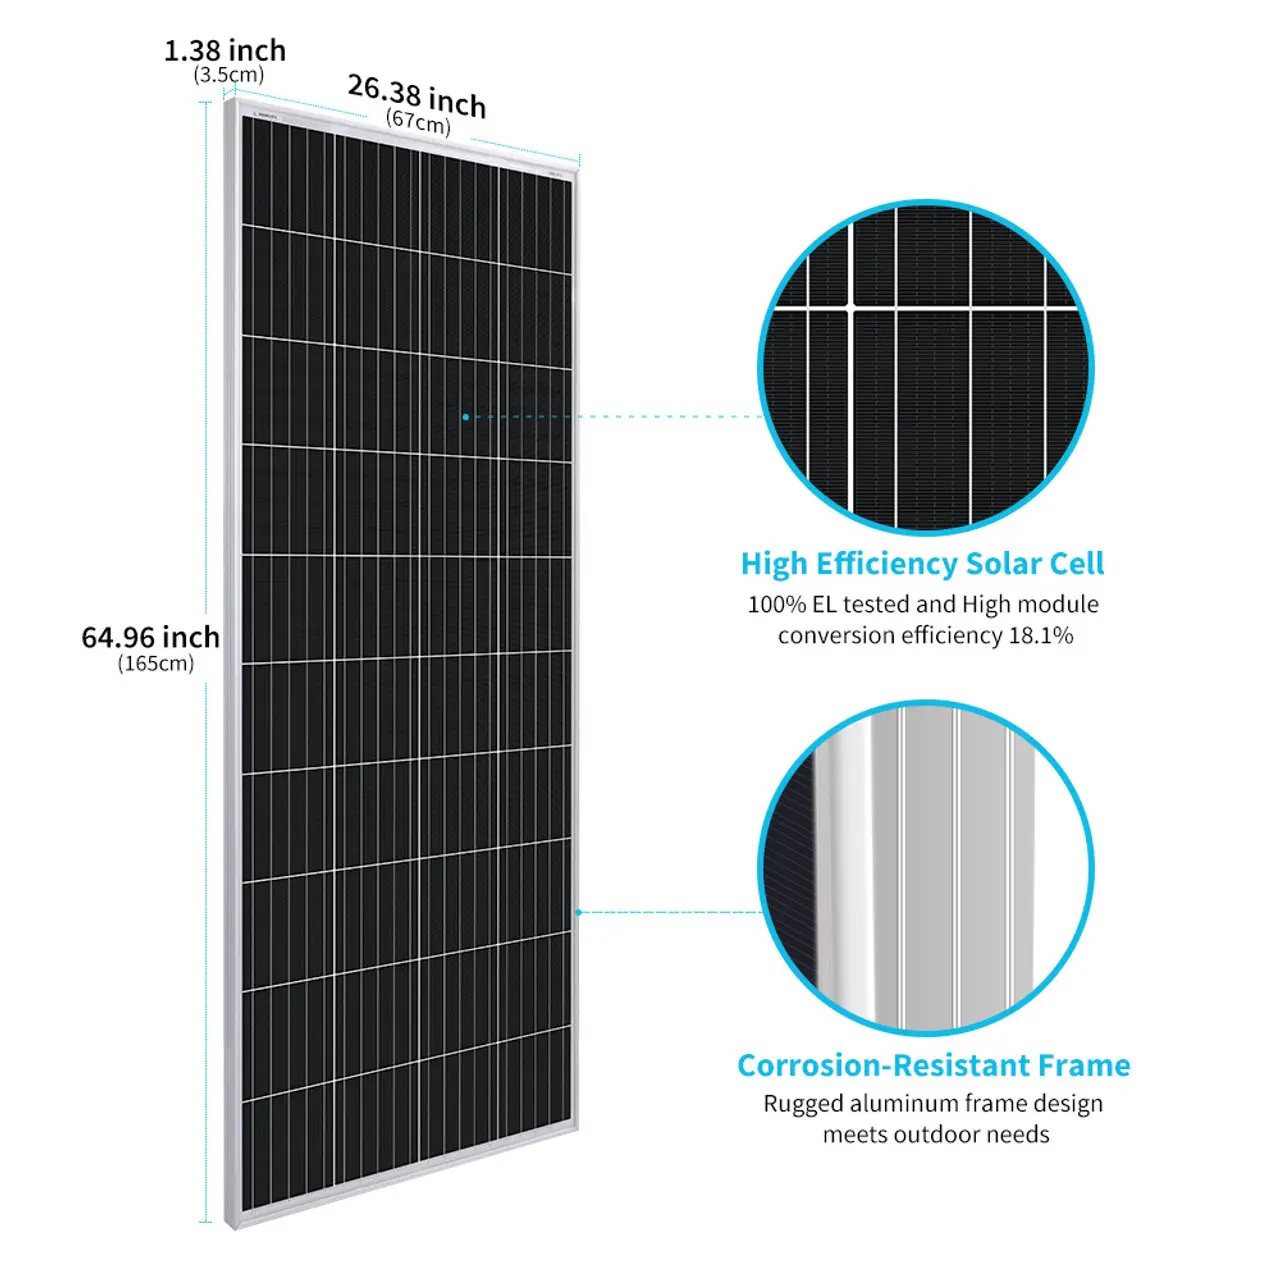 200 watt solar panel dimensions - How big is a 250 watt solar panel